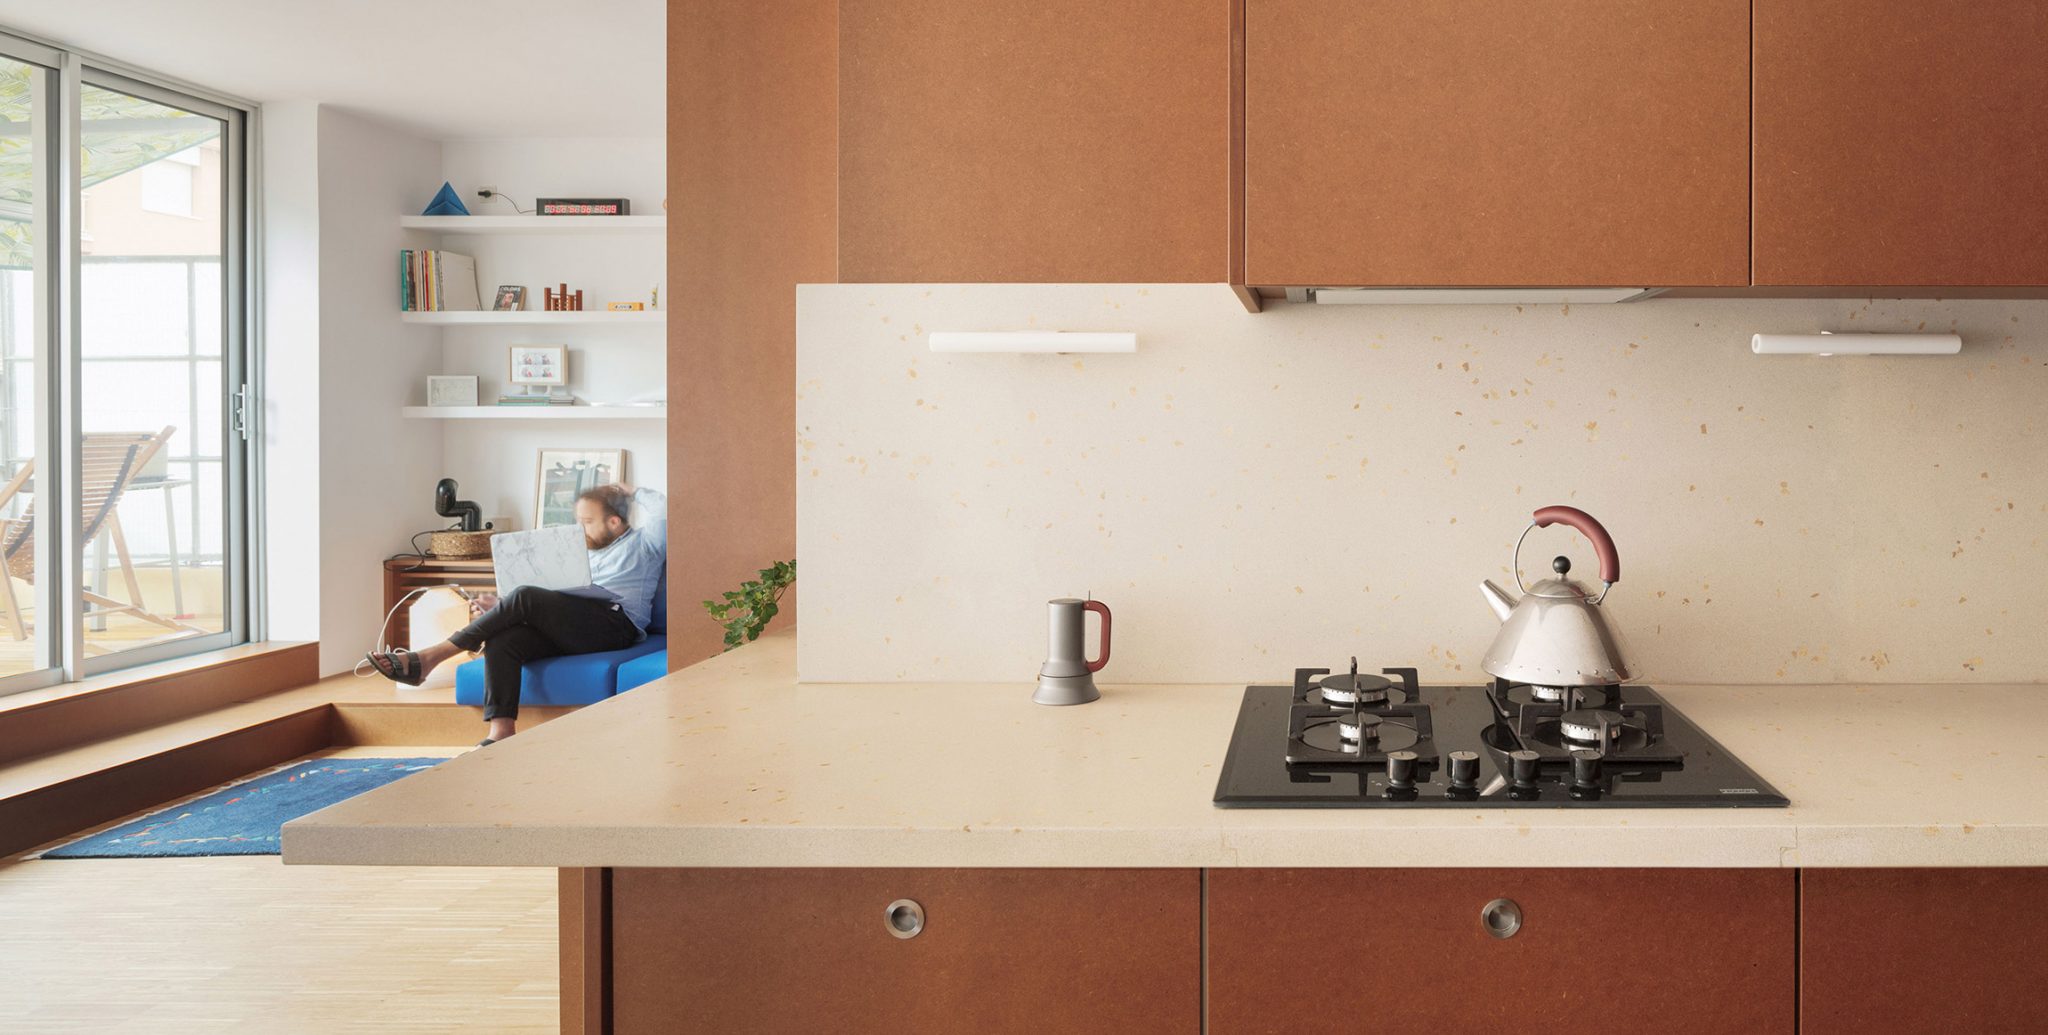 Modular Kitchen Designs With Prices Homelane